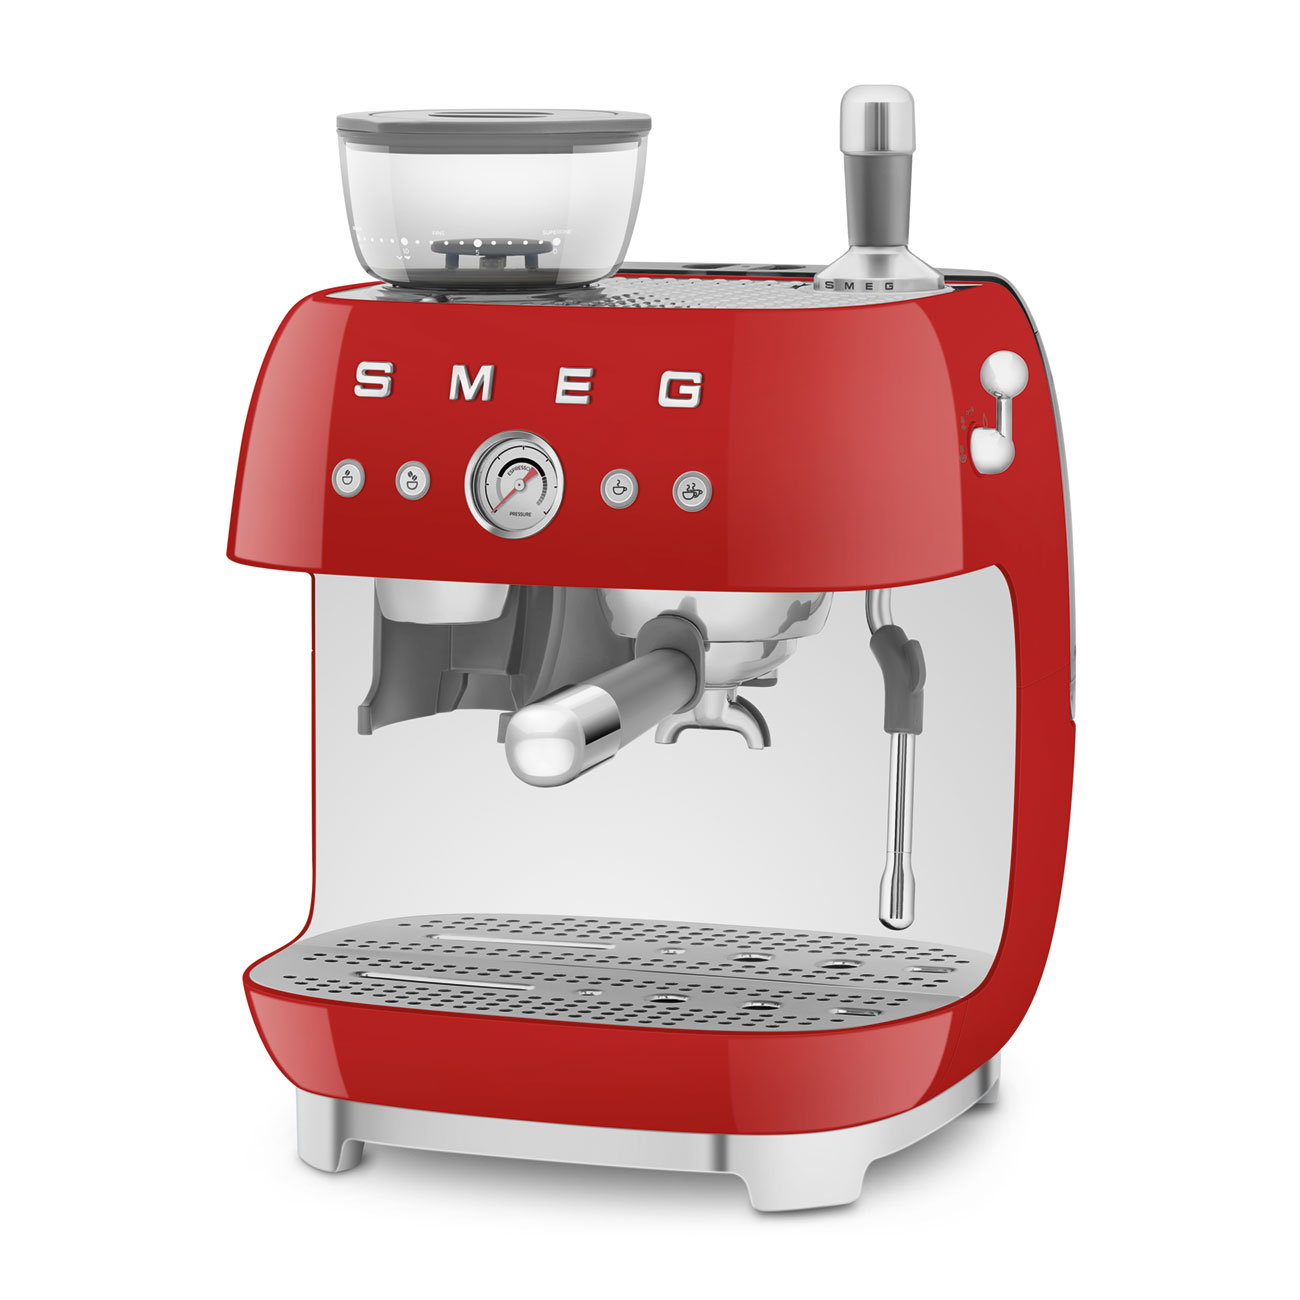 Smeg Red Espresso Manual Coffee Machine with Grinder_4